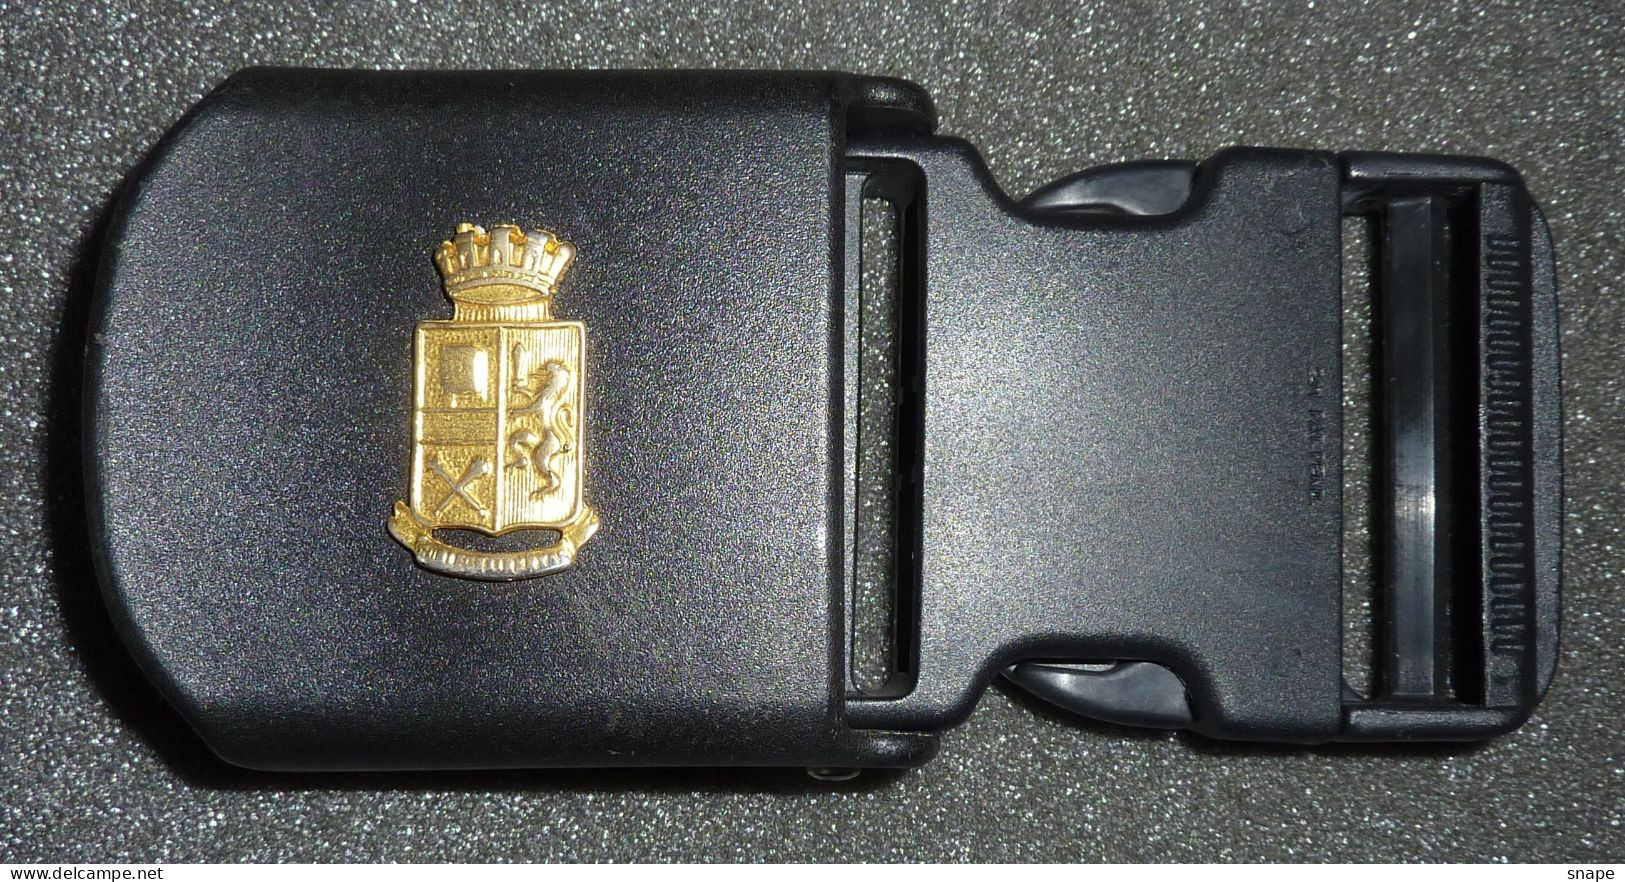 FIBBIA CINTURONE OPERATIVO Polizia - Obsoleta Usata - Italian Police Belt Buckle - Used (286-3) - Police